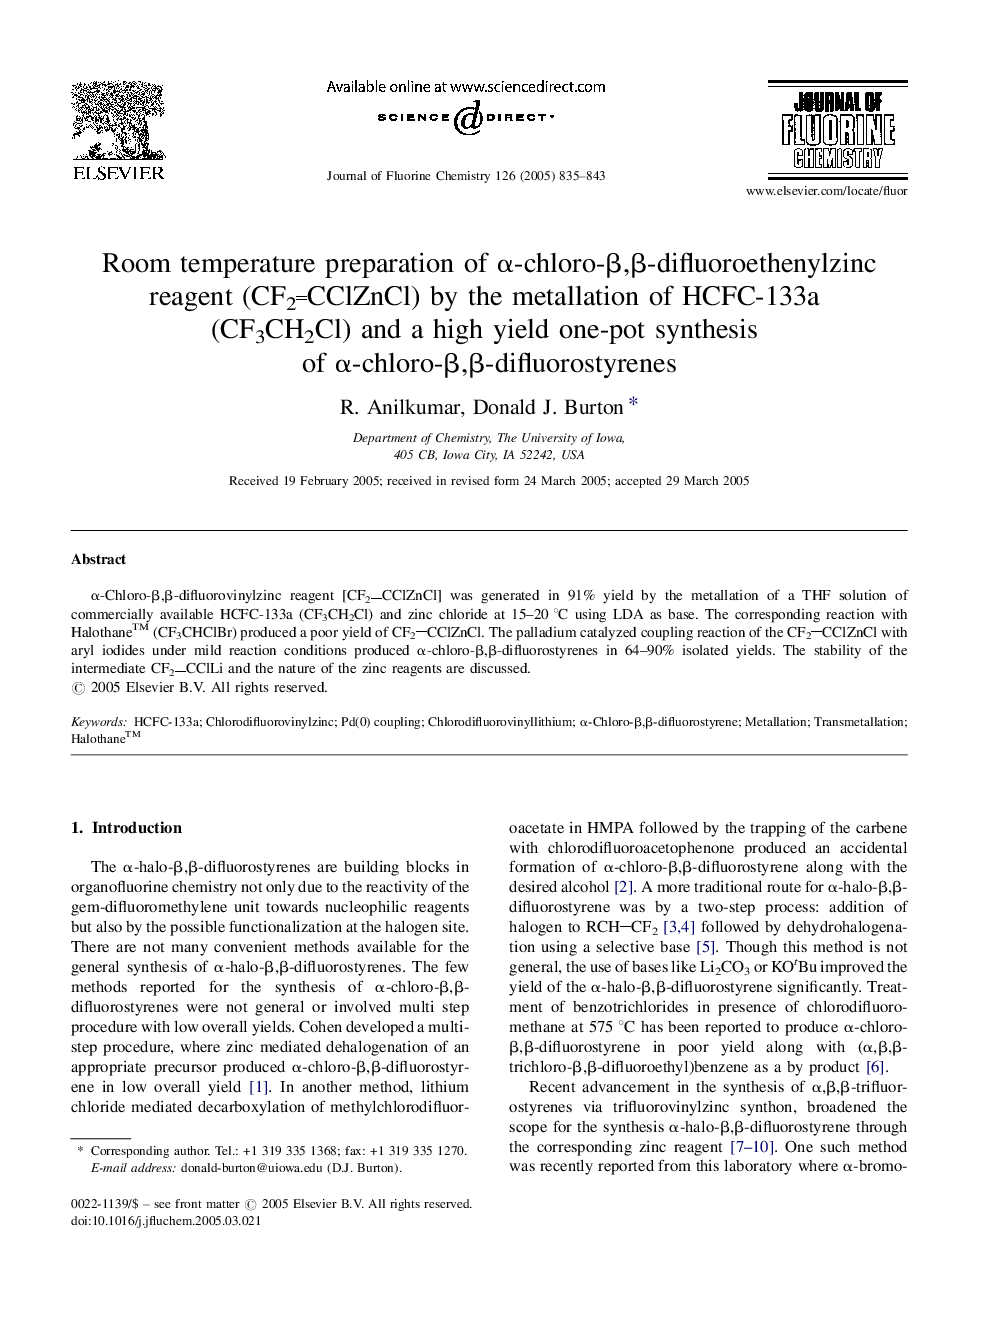 Room temperature preparation of Î±-chloro-Î²,Î²-difluoroethenylzinc reagent (CF2CClZnCl) by the metallation of HCFC-133a (CF3CH2Cl) and a high yield one-pot synthesis of Î±-chloro-Î²,Î²-difluorostyrenes